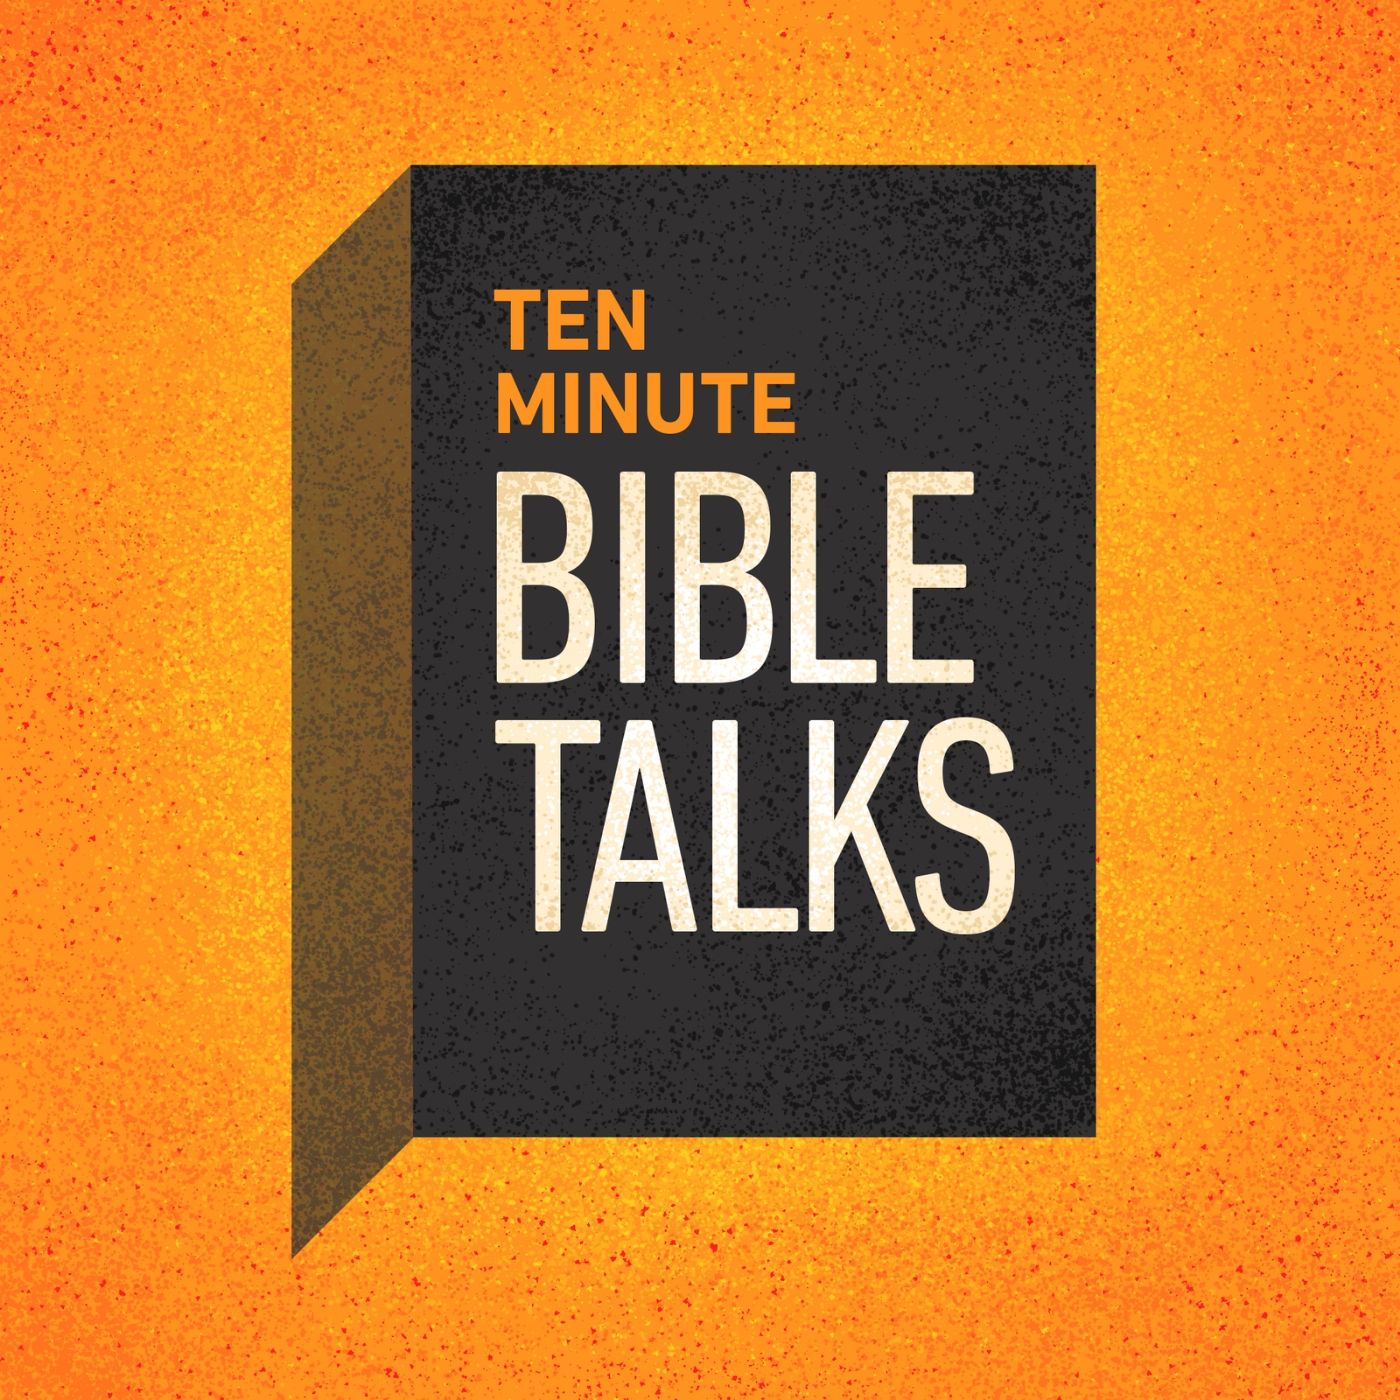 Is "Do Not Lie" in the Bible? | Torah | Exodus 20:16, 23:1-3